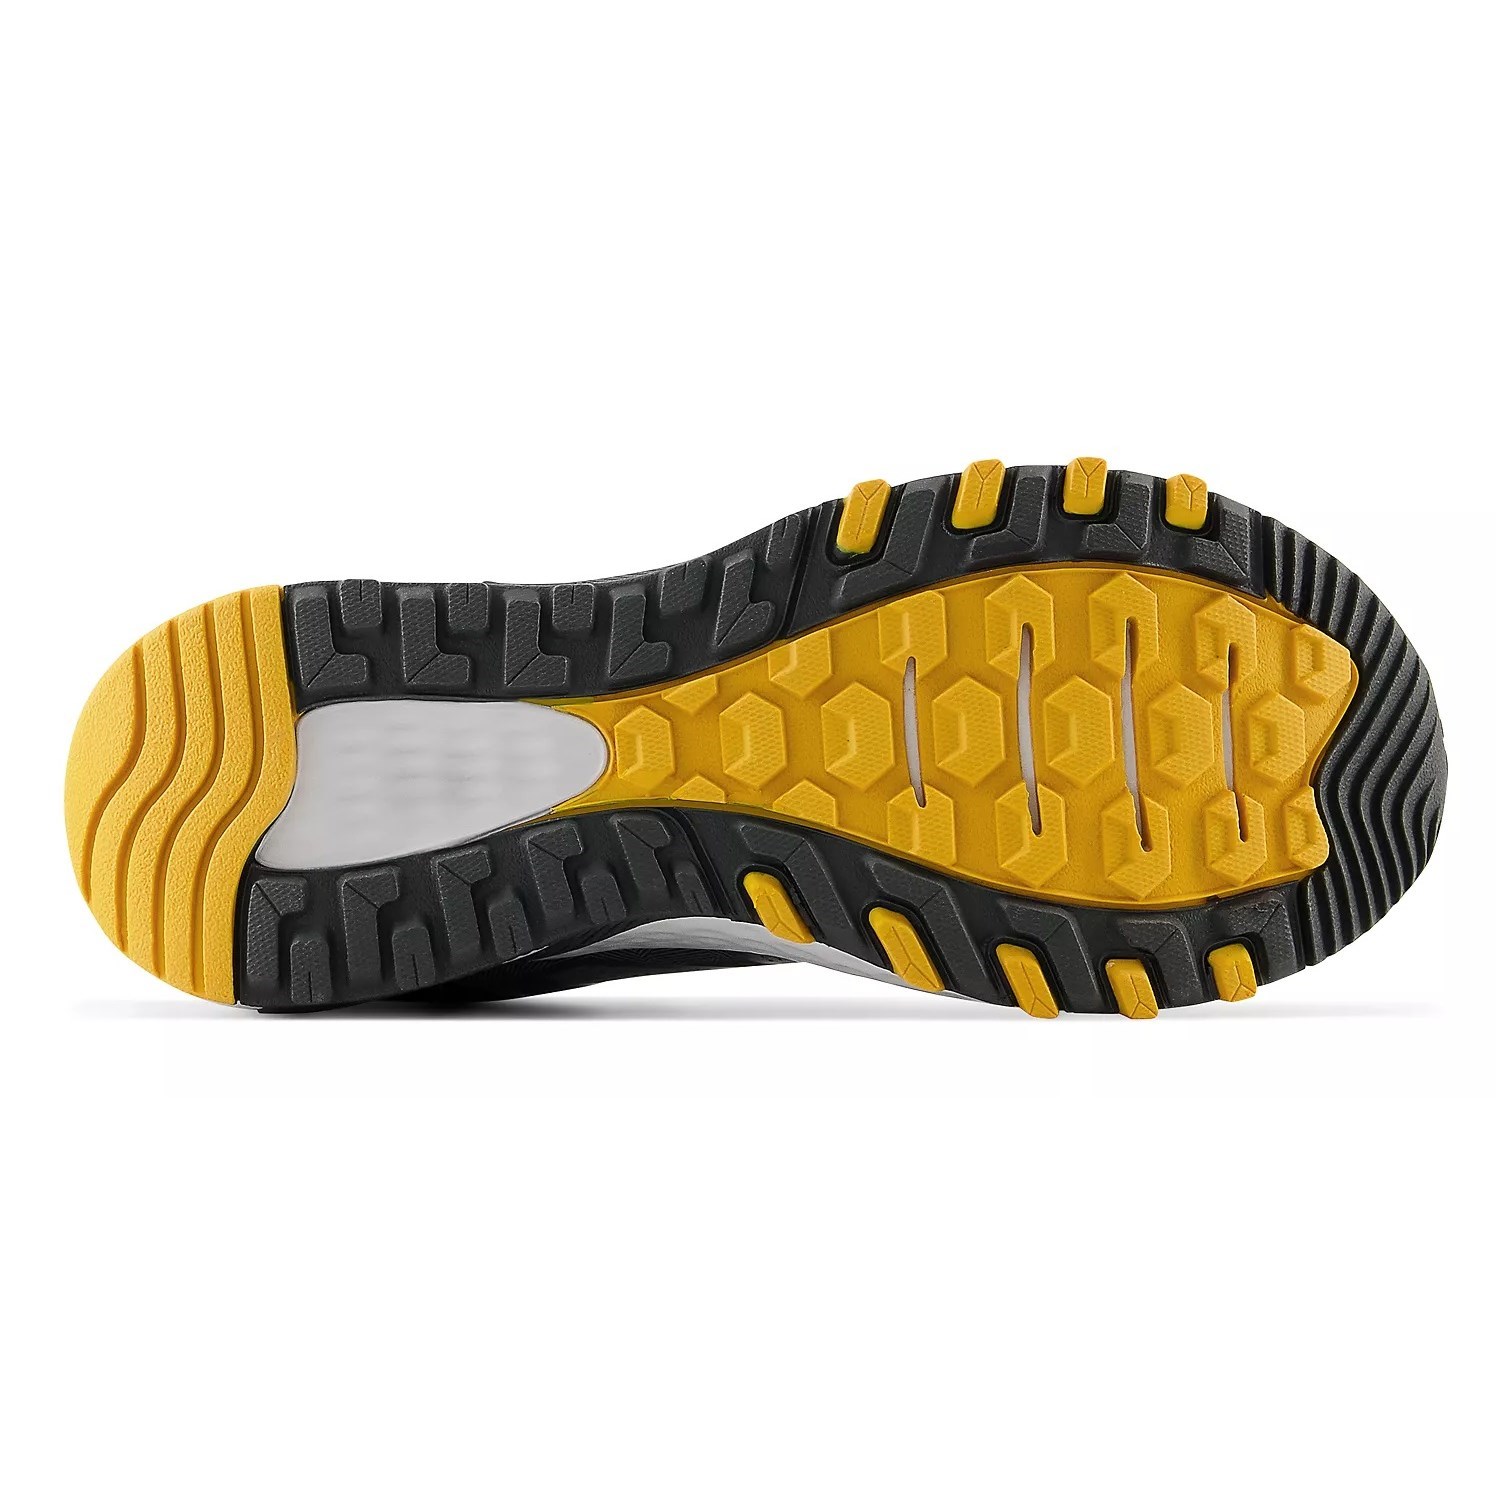 New Balance 410v8 - Mens Trail Running Shoes - Castlerock/Black/Varsity ...